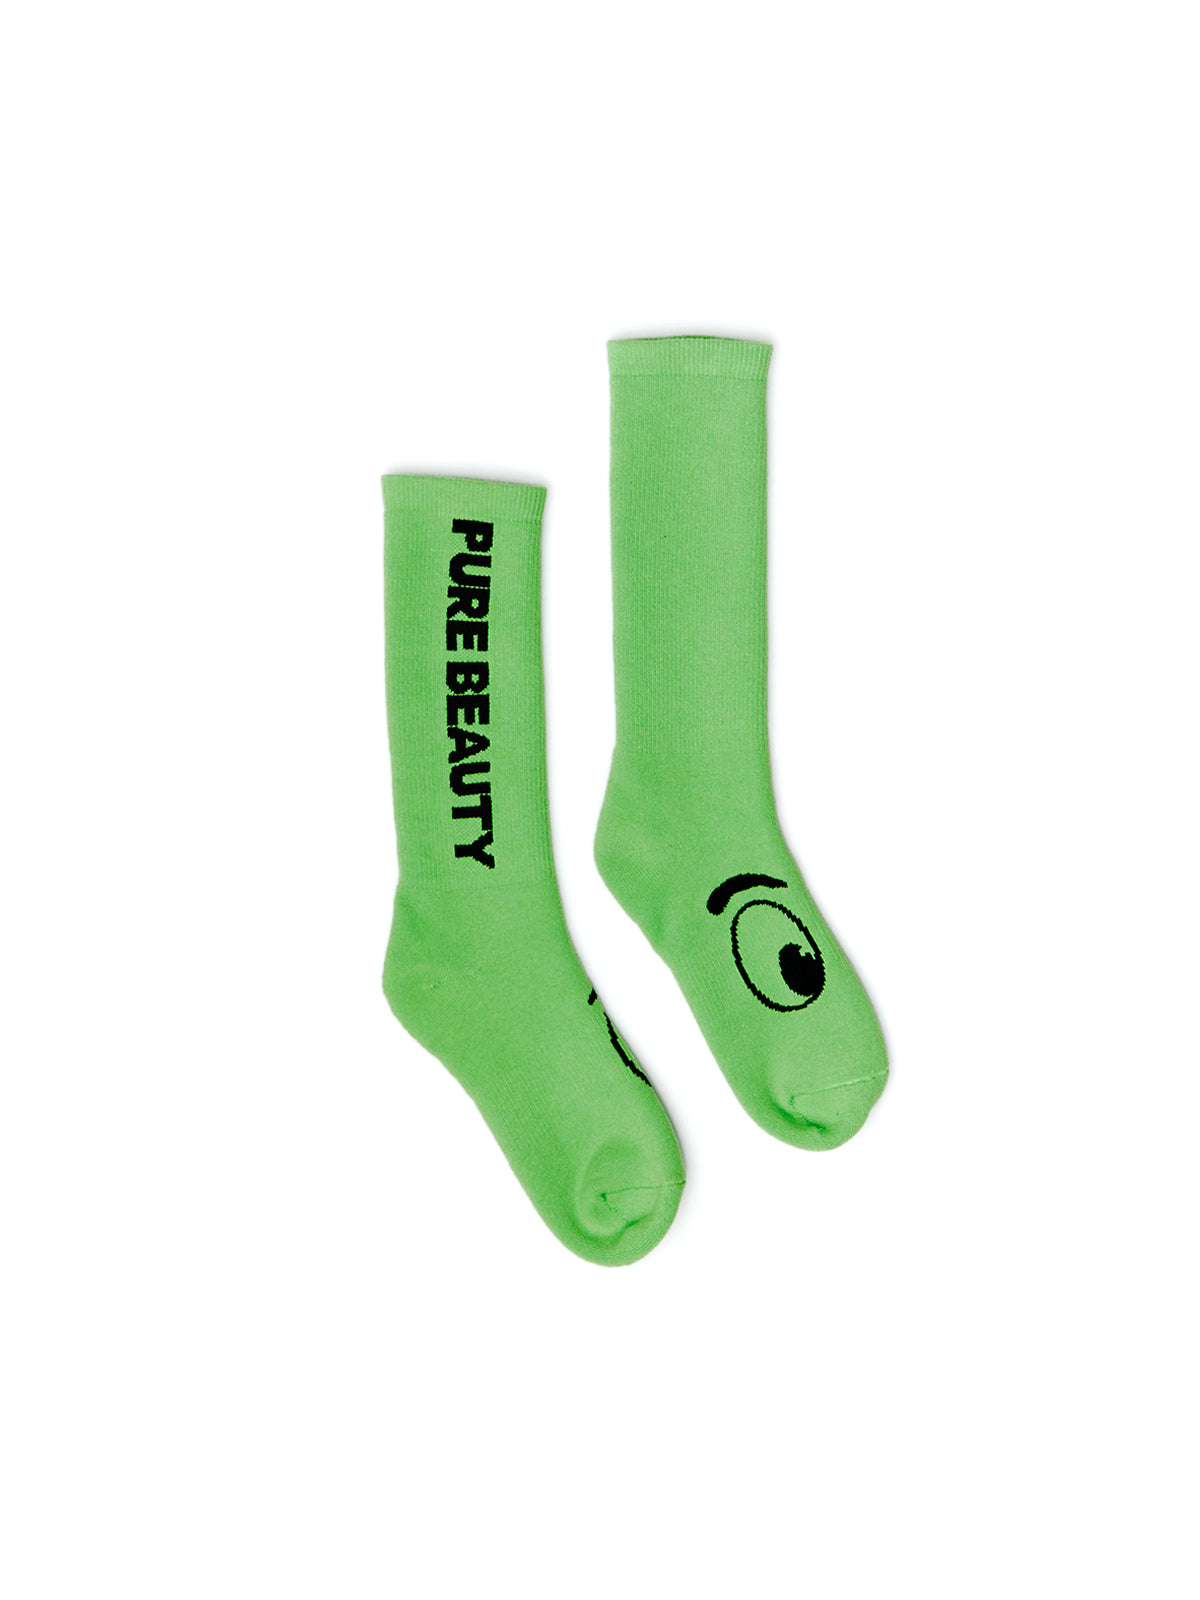 PB Socks - Green